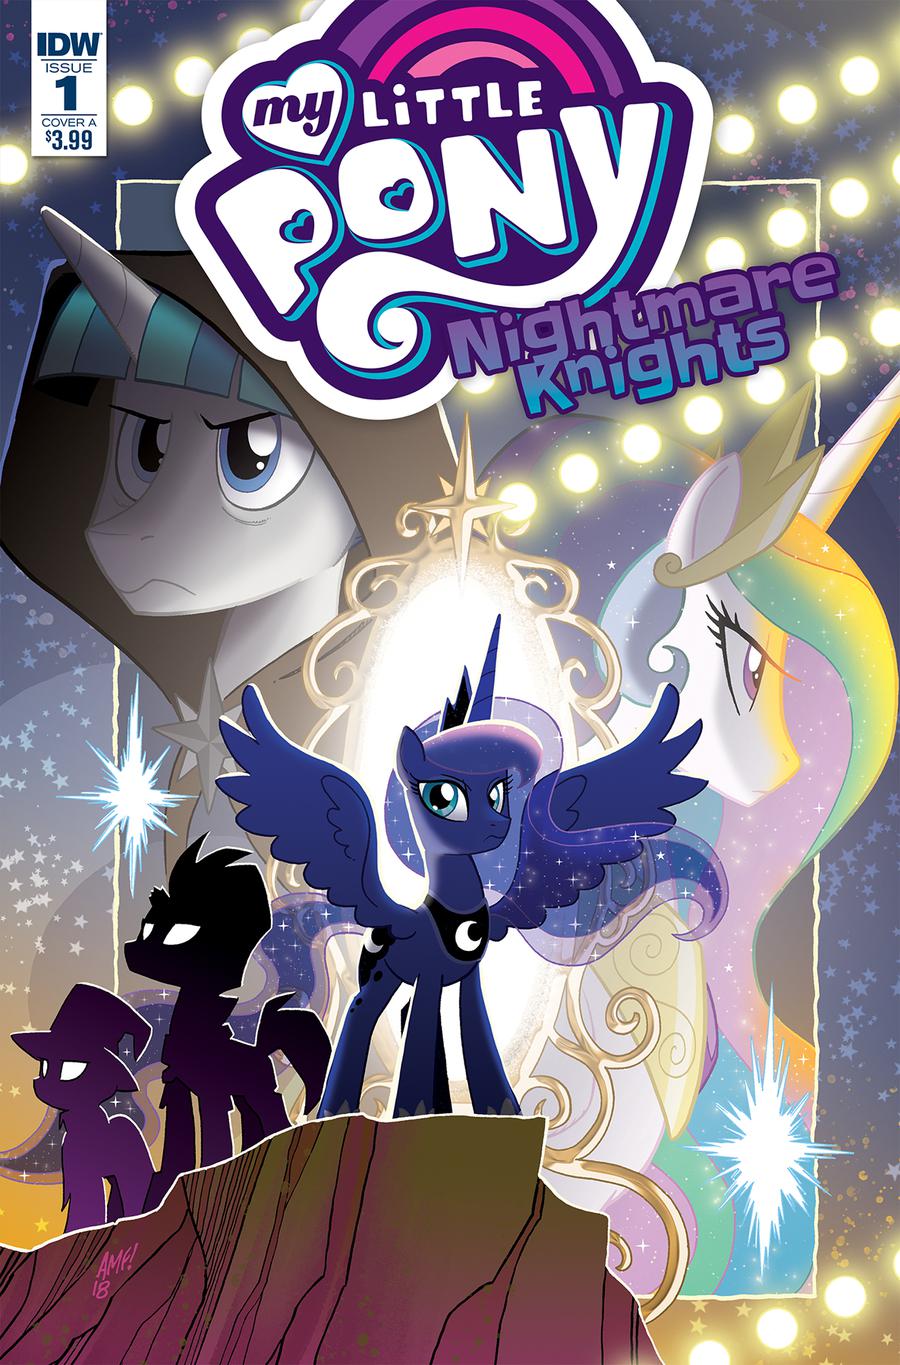 My Little Pony Nightmare Knights #1 Cover A Regular Tony Fleecs Cover